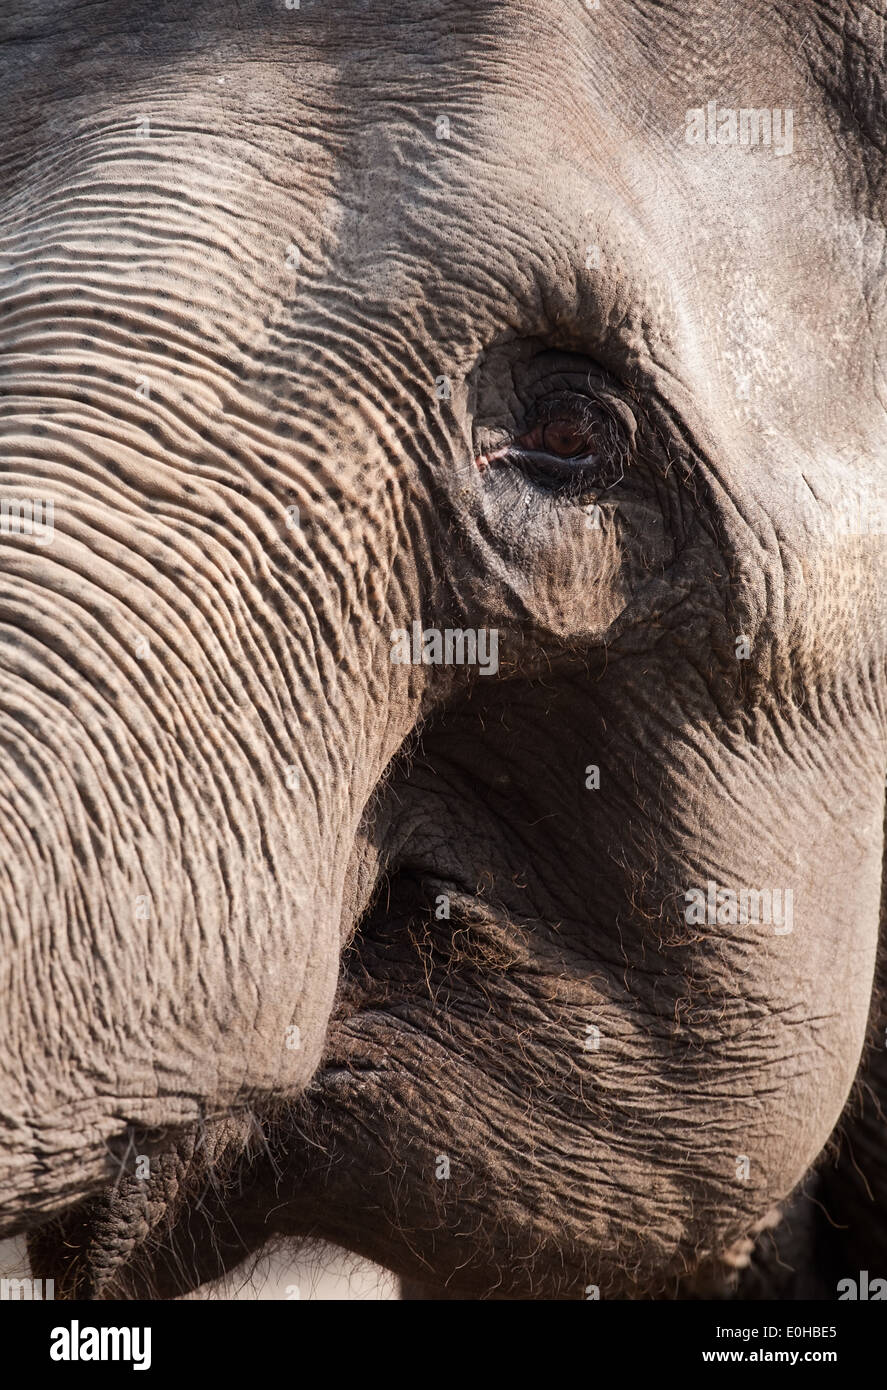 closeup portrait of elephant face, sad eye and trunk skin details Stock Photo